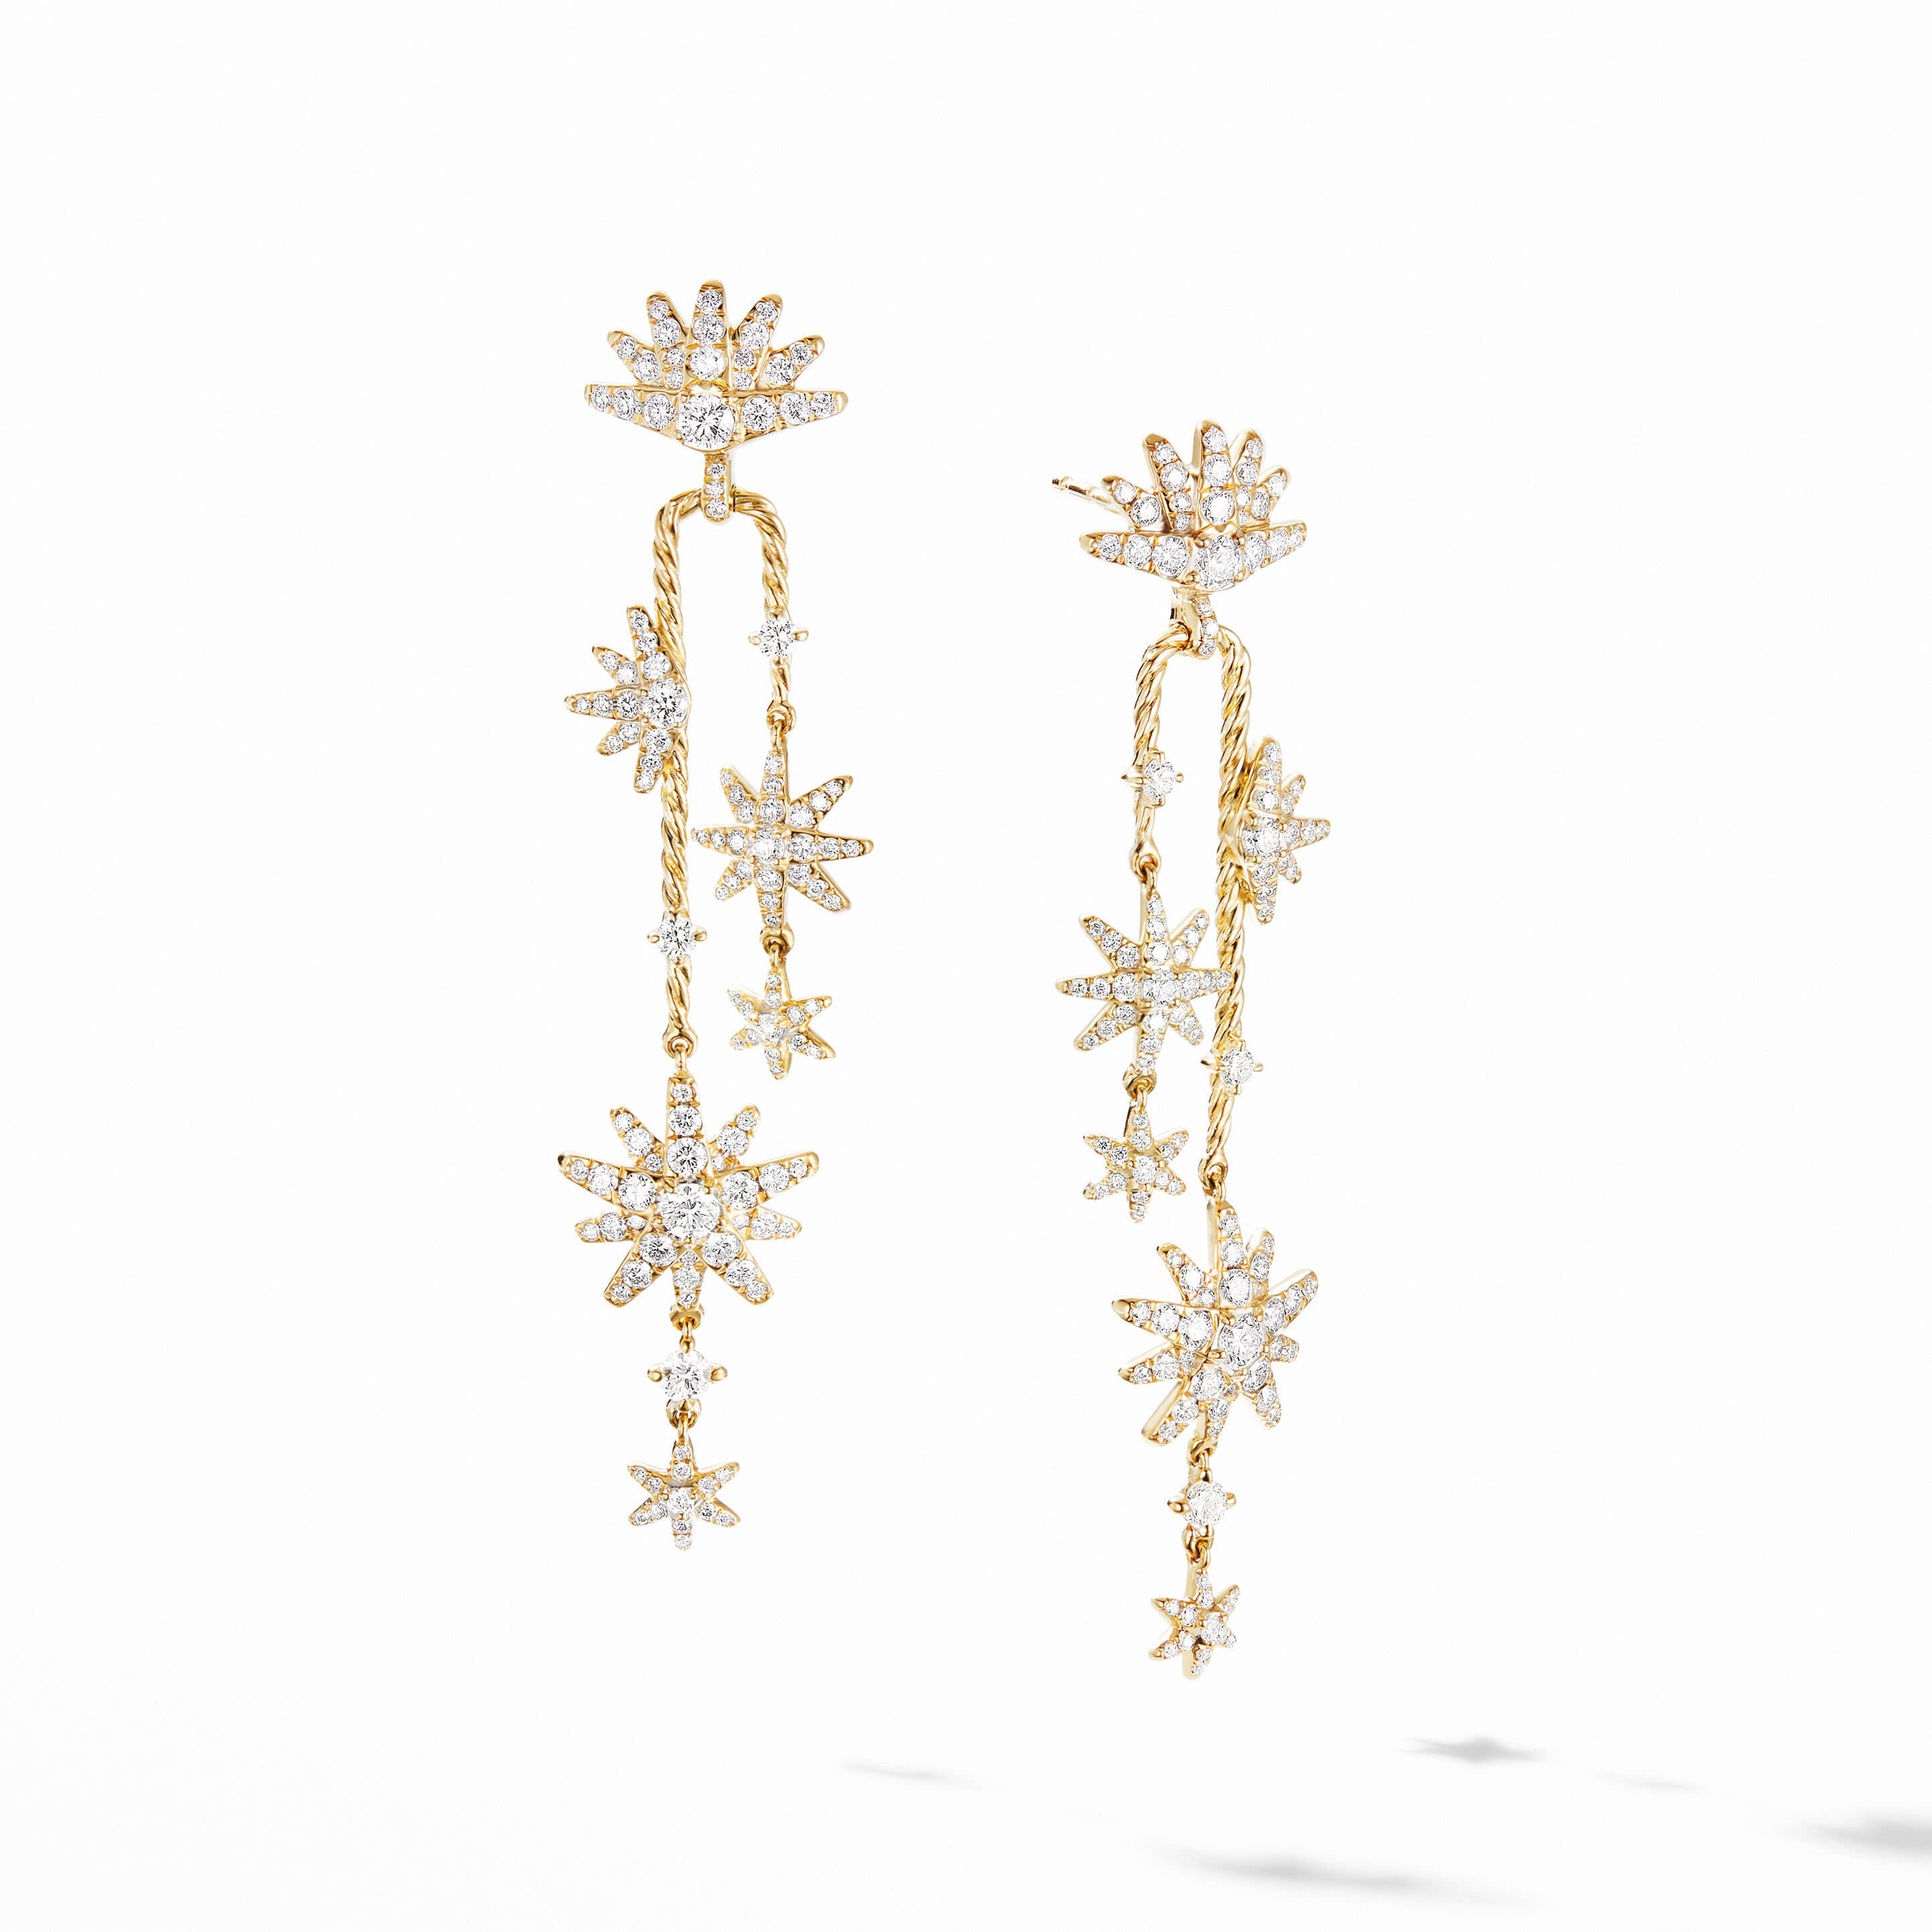 Starburst Cascade Drop Earrings in 18K Yellow Gold with Pavé Diamonds